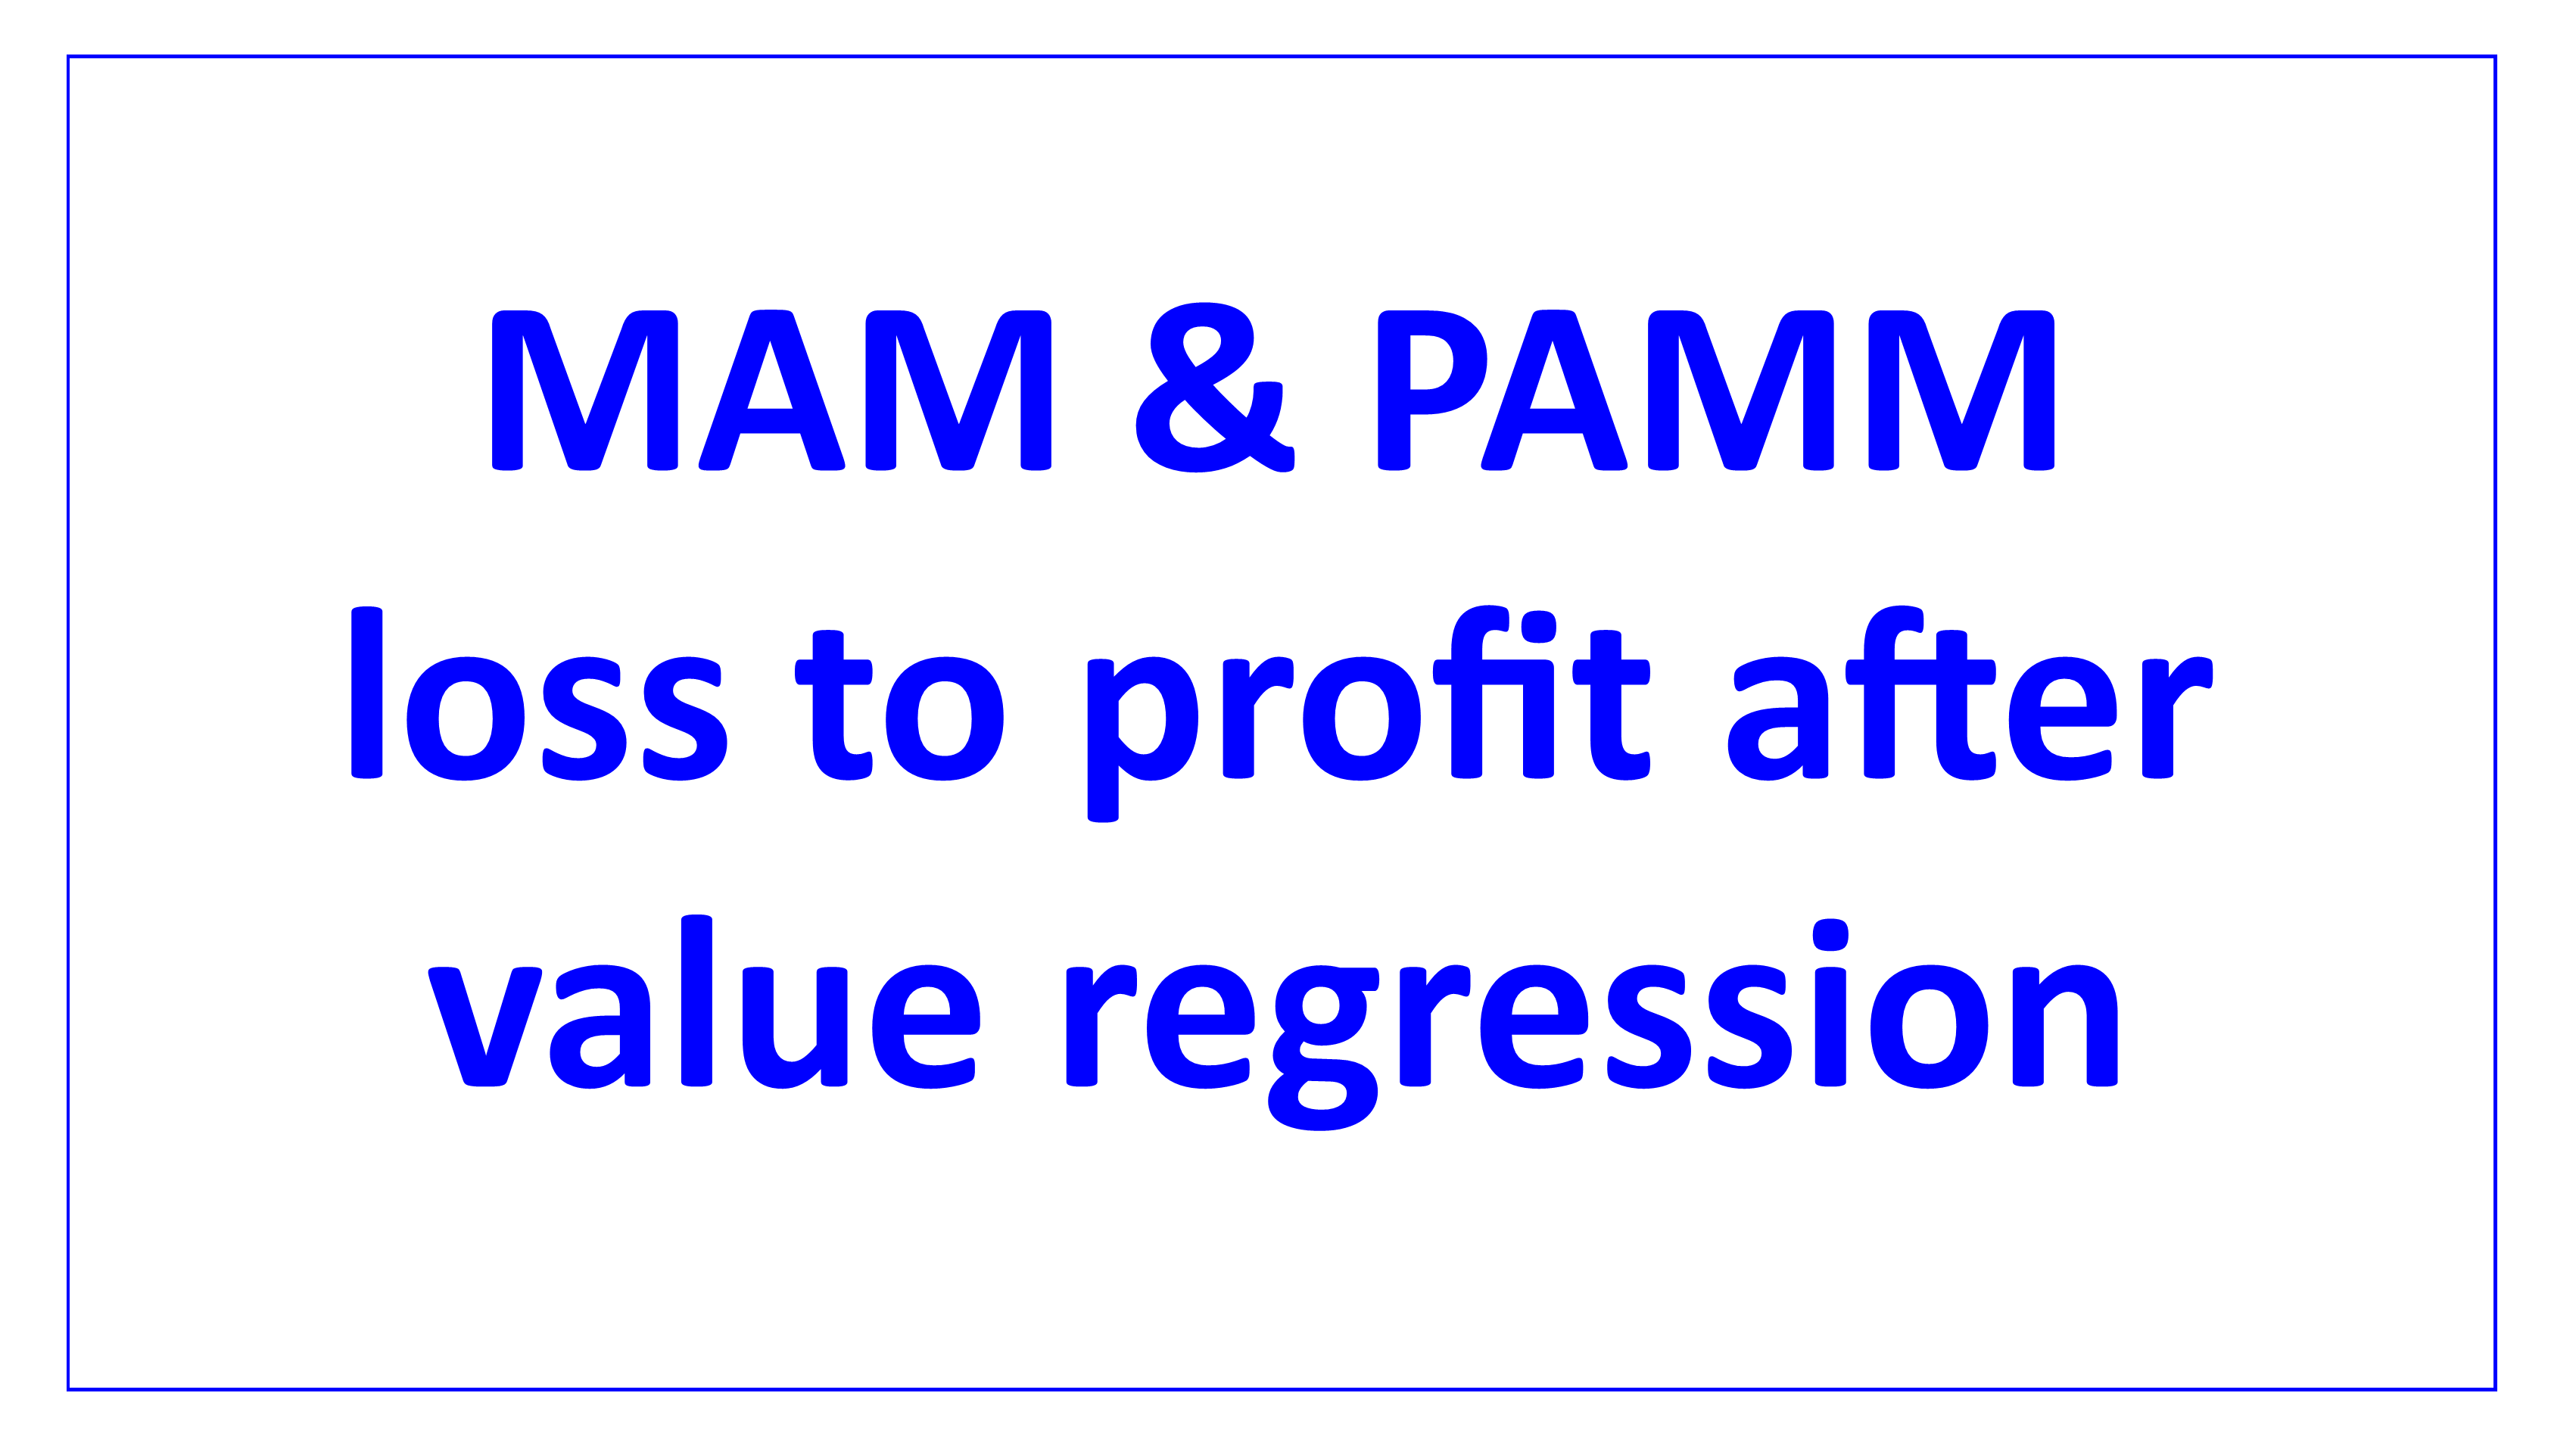 loss to profit after value regression en